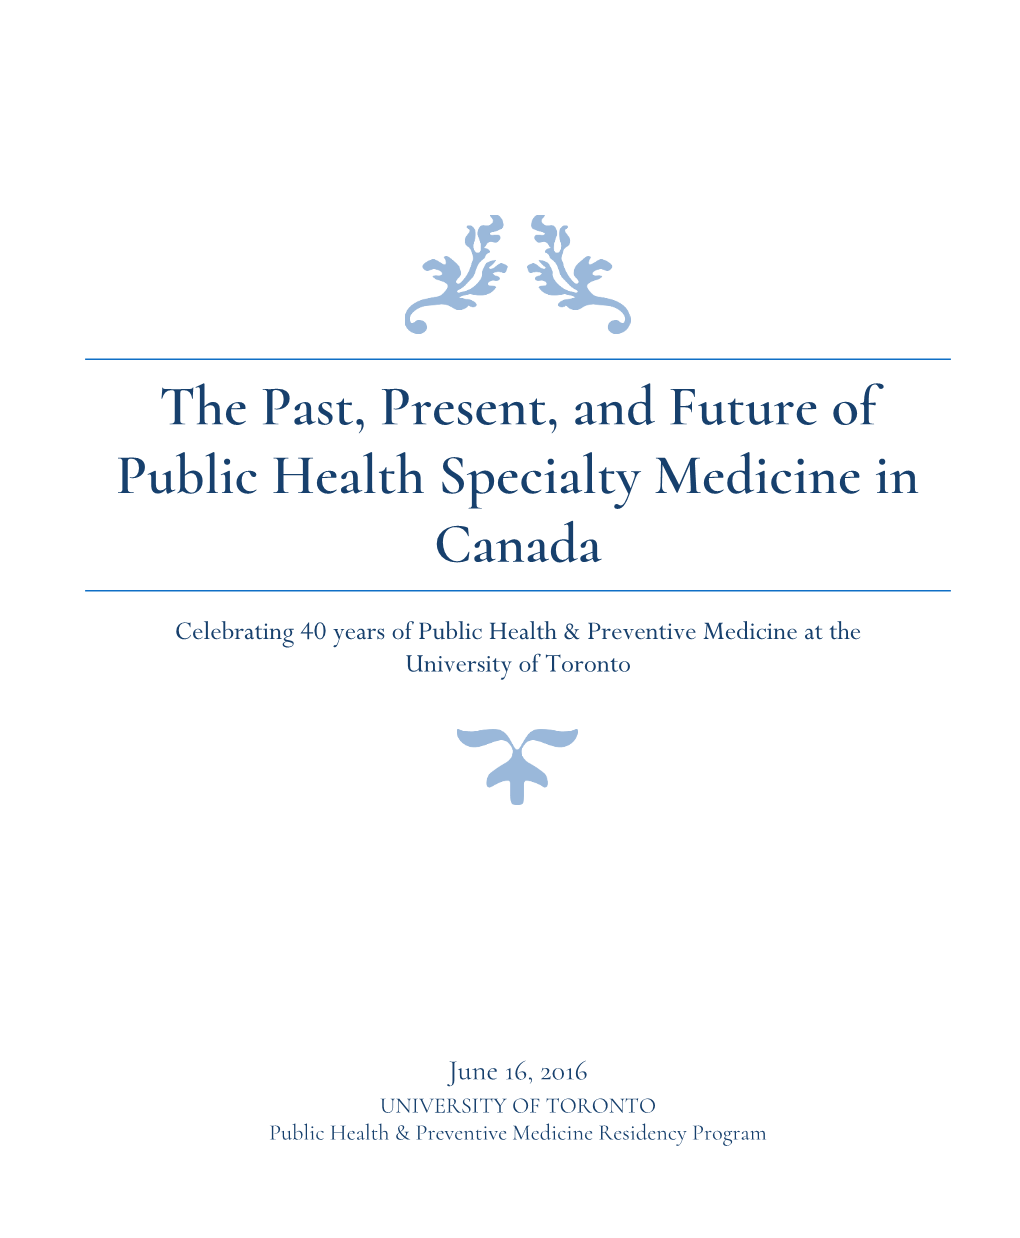 The Past, Present, and Future of Public Health Specialty Medicine in Canada